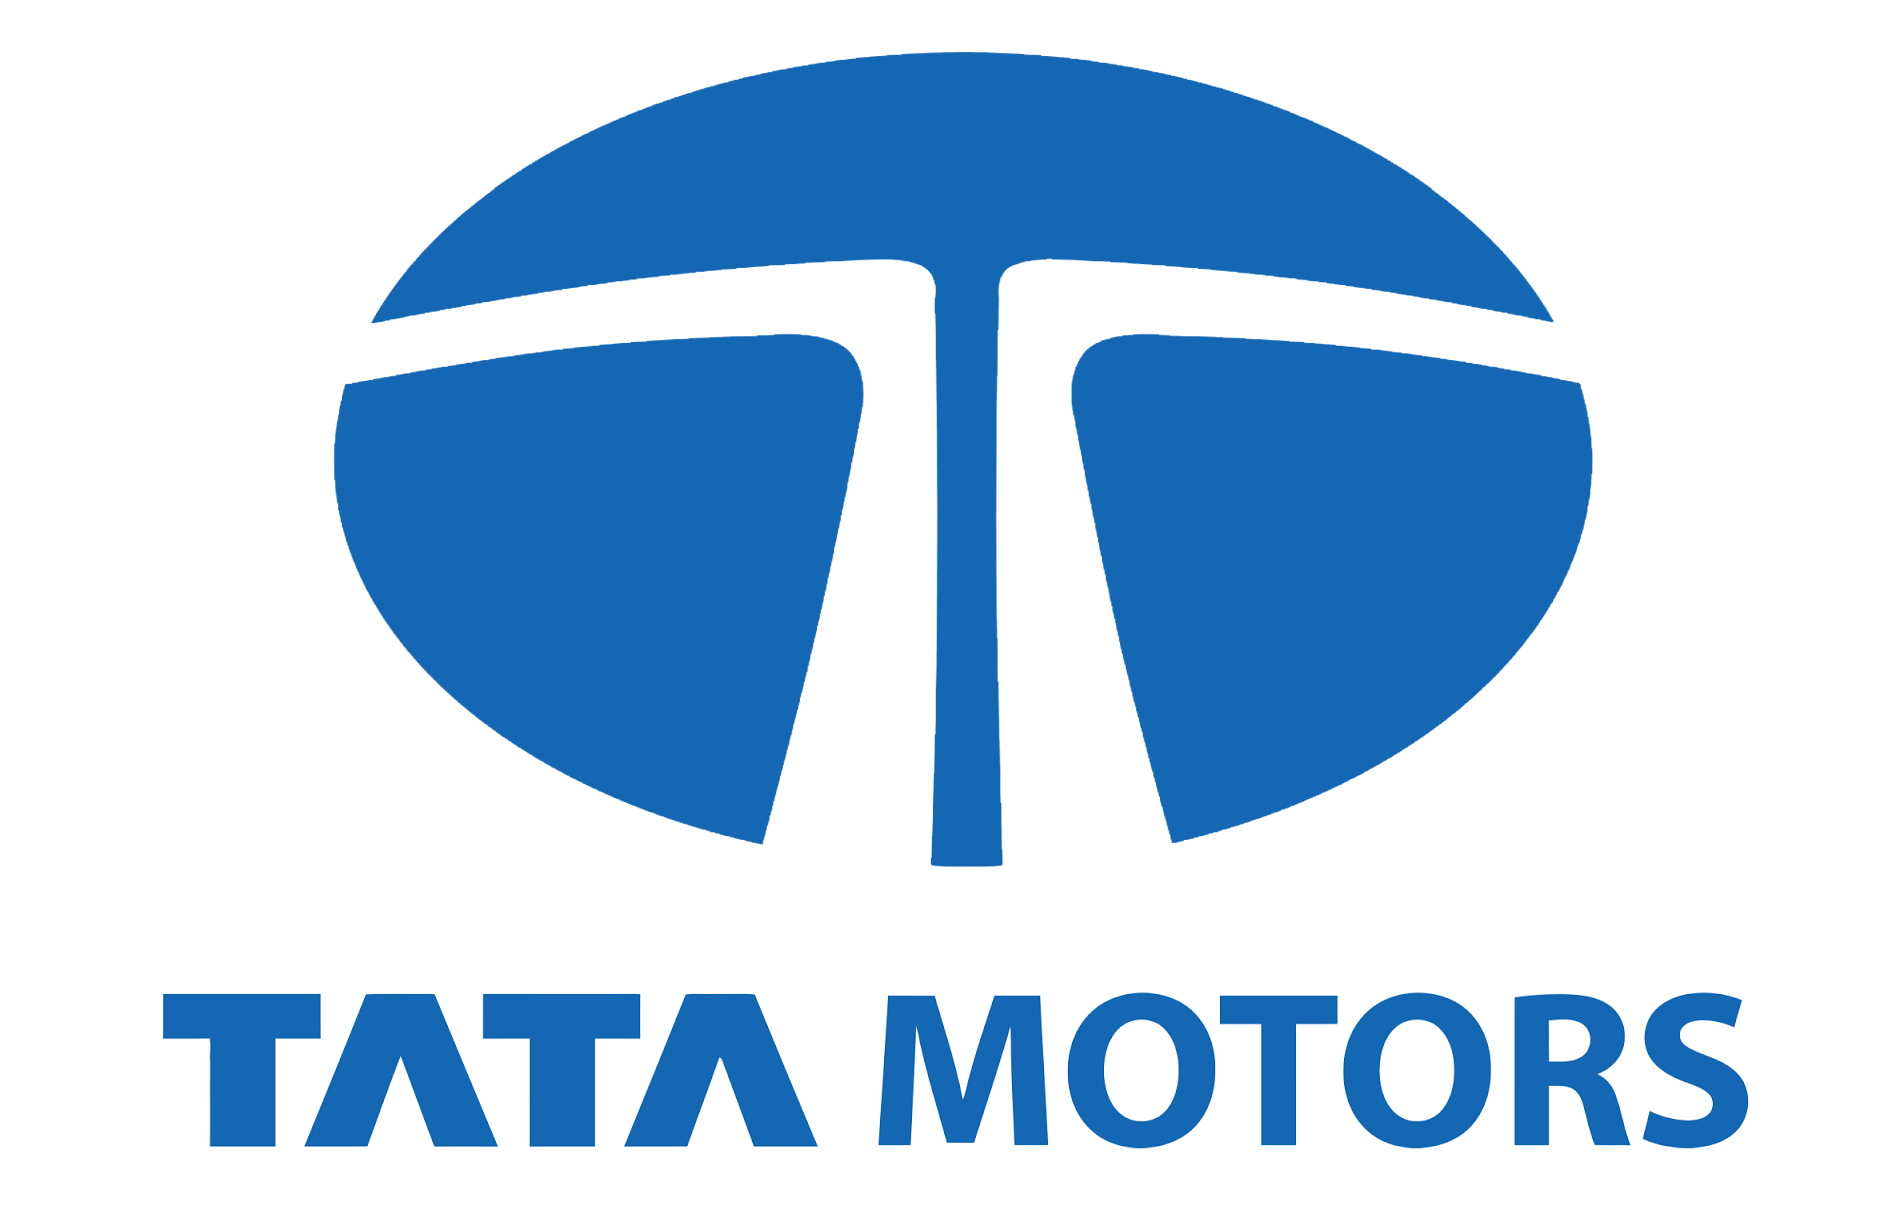 Tata Motors Cars Showroom - Dada Motors|Show Room|Automotive